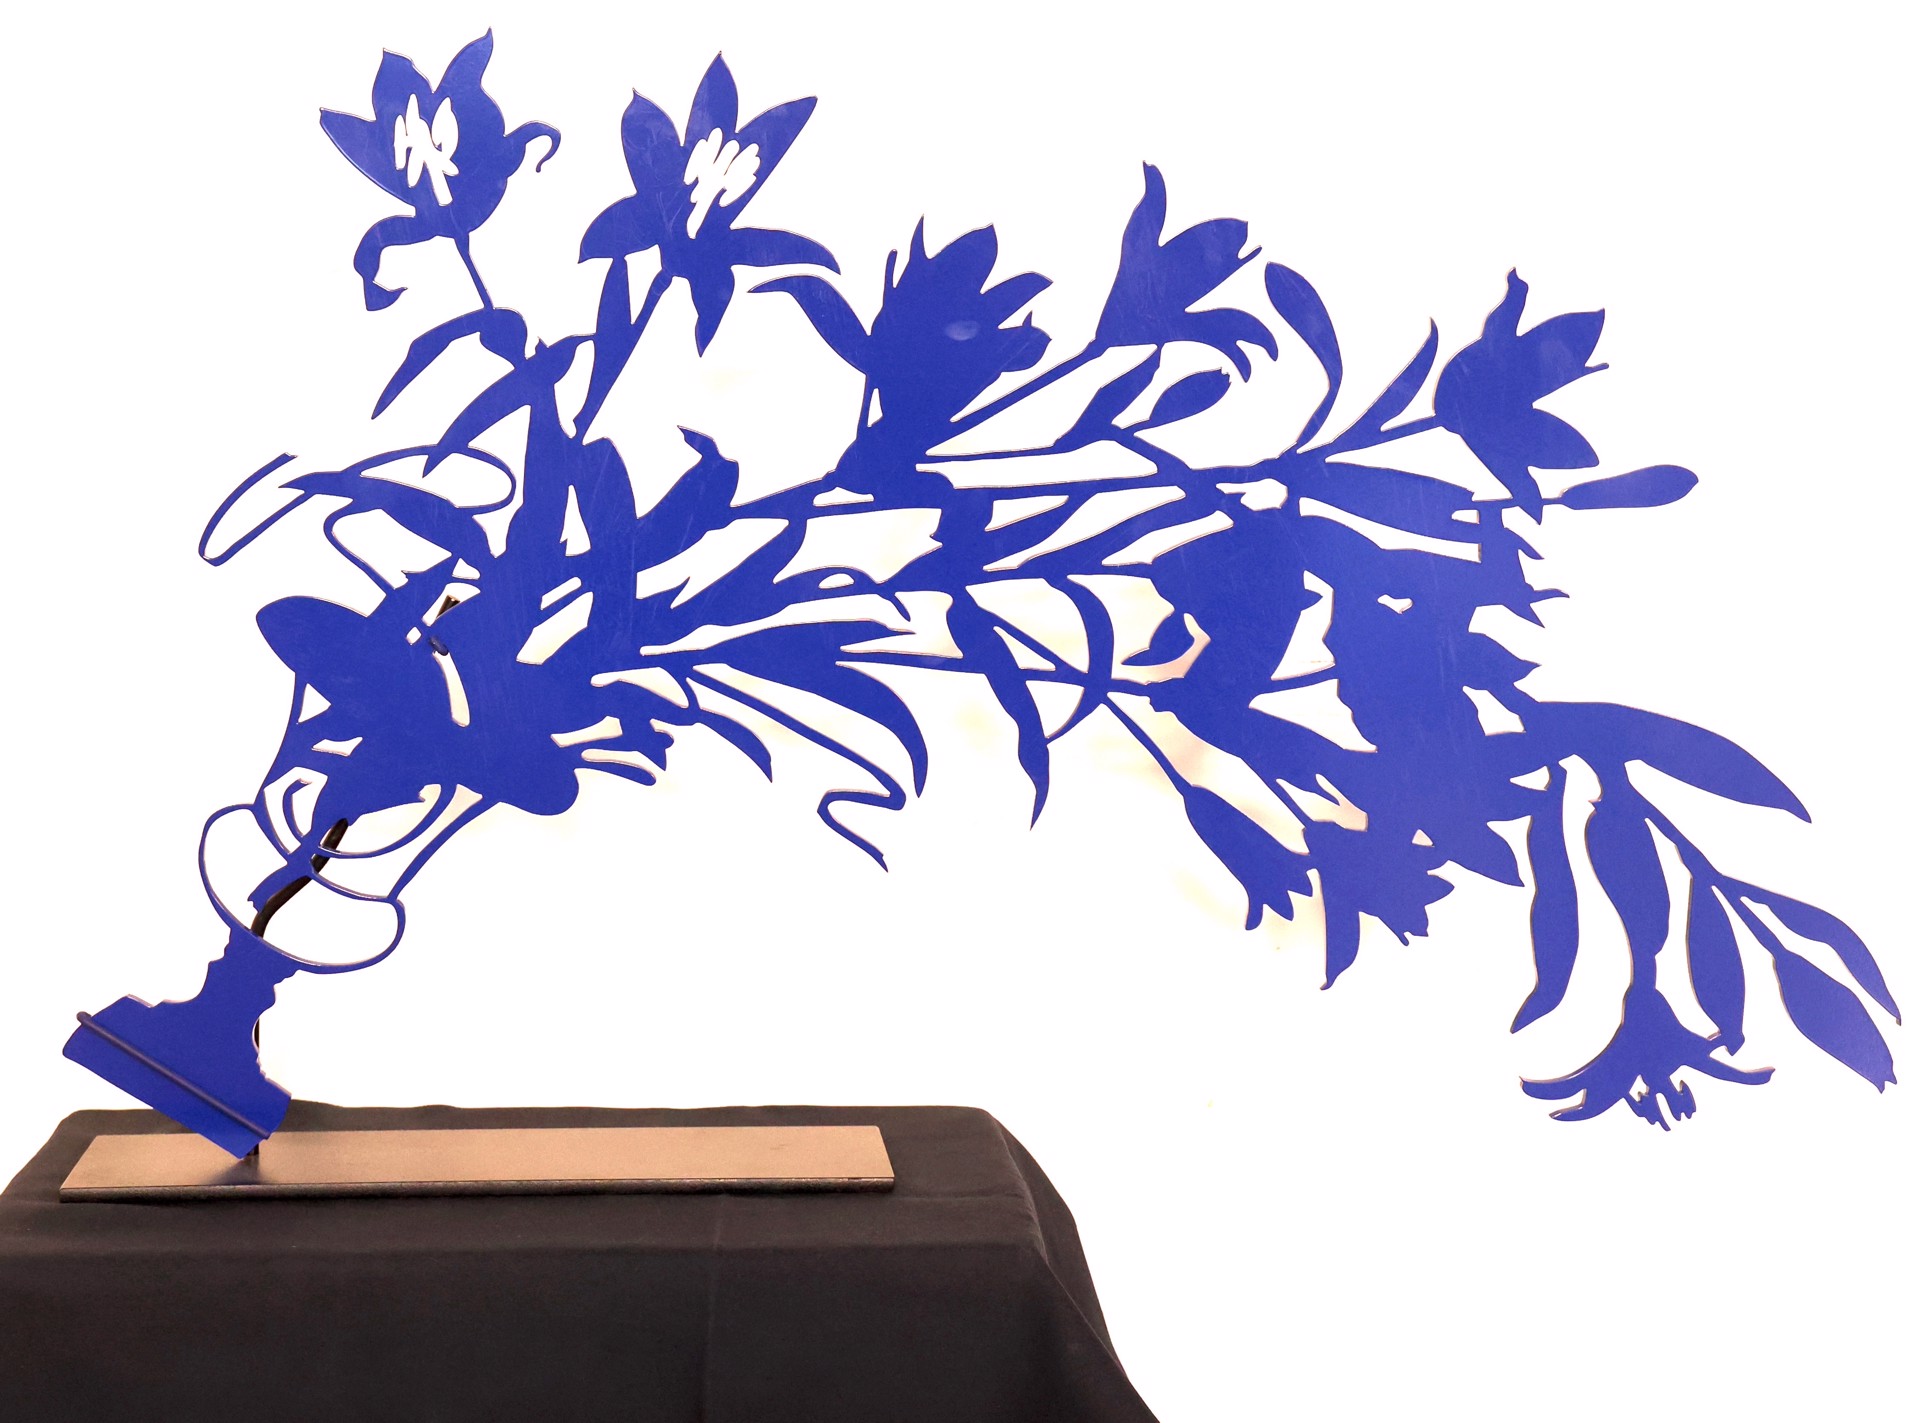 Urn with Flying Lilies in Blue - indoor or garden sculpture by Gary Bukovnik